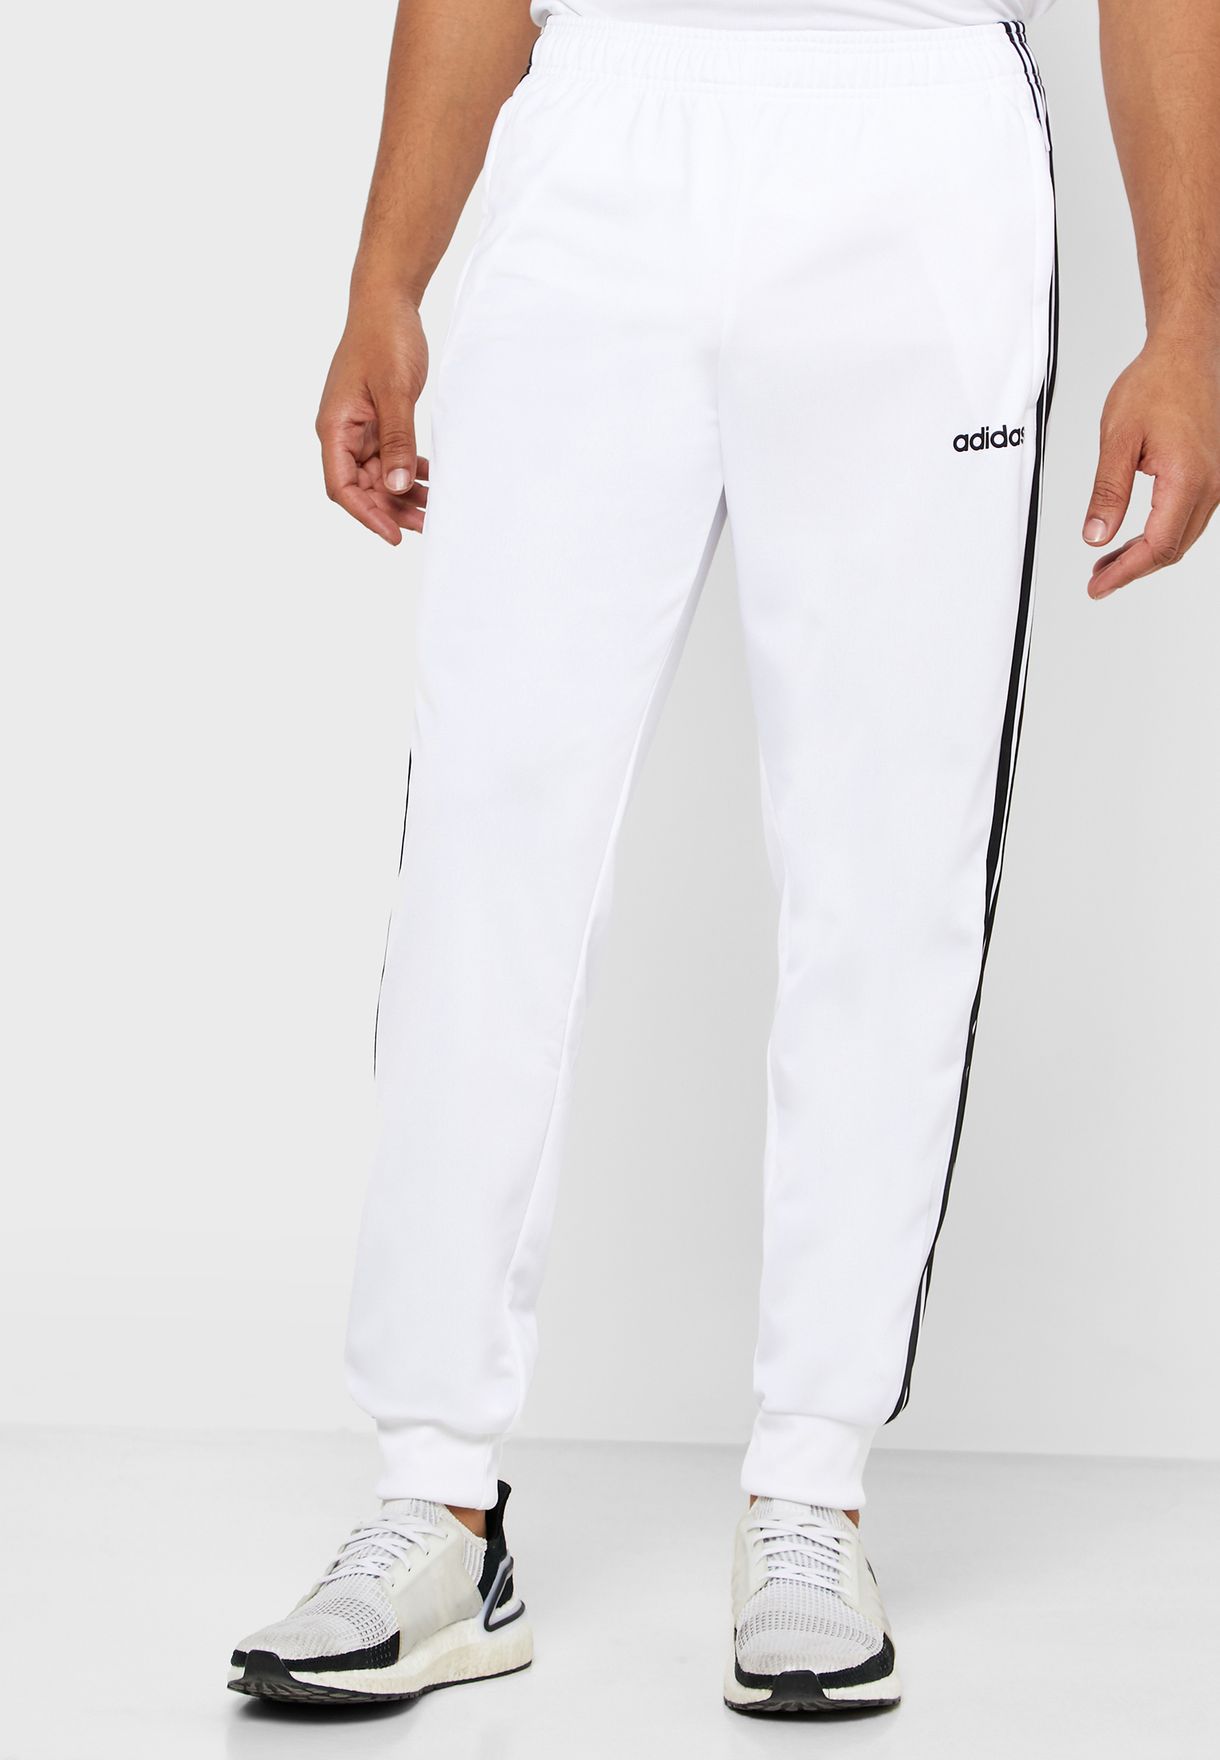 adidas pants mens white